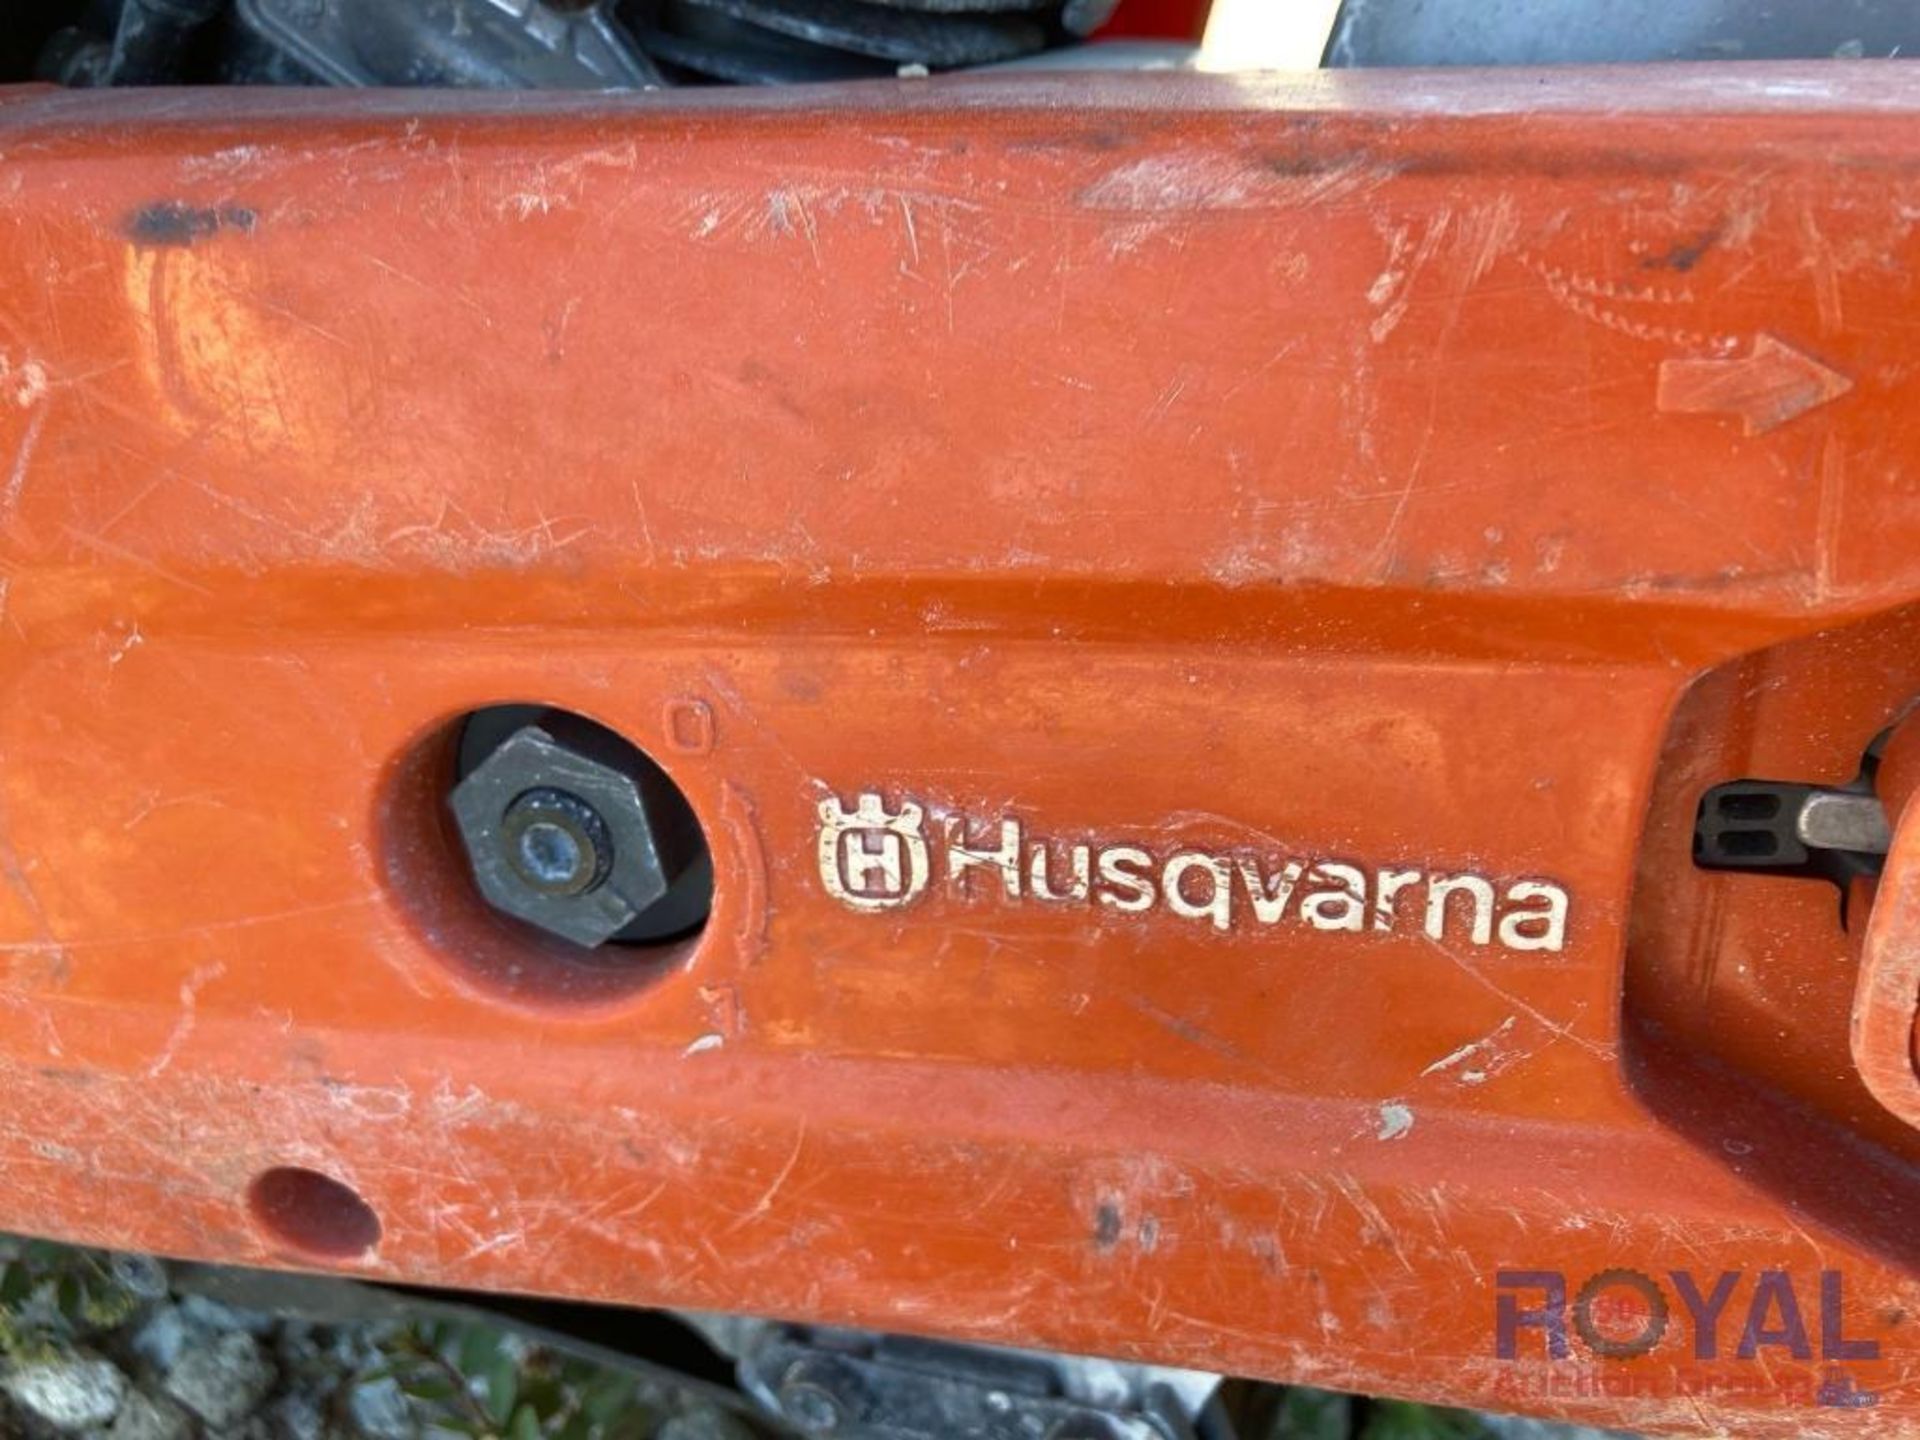 Husqvarna K770 Concrete Saw - Image 3 of 5